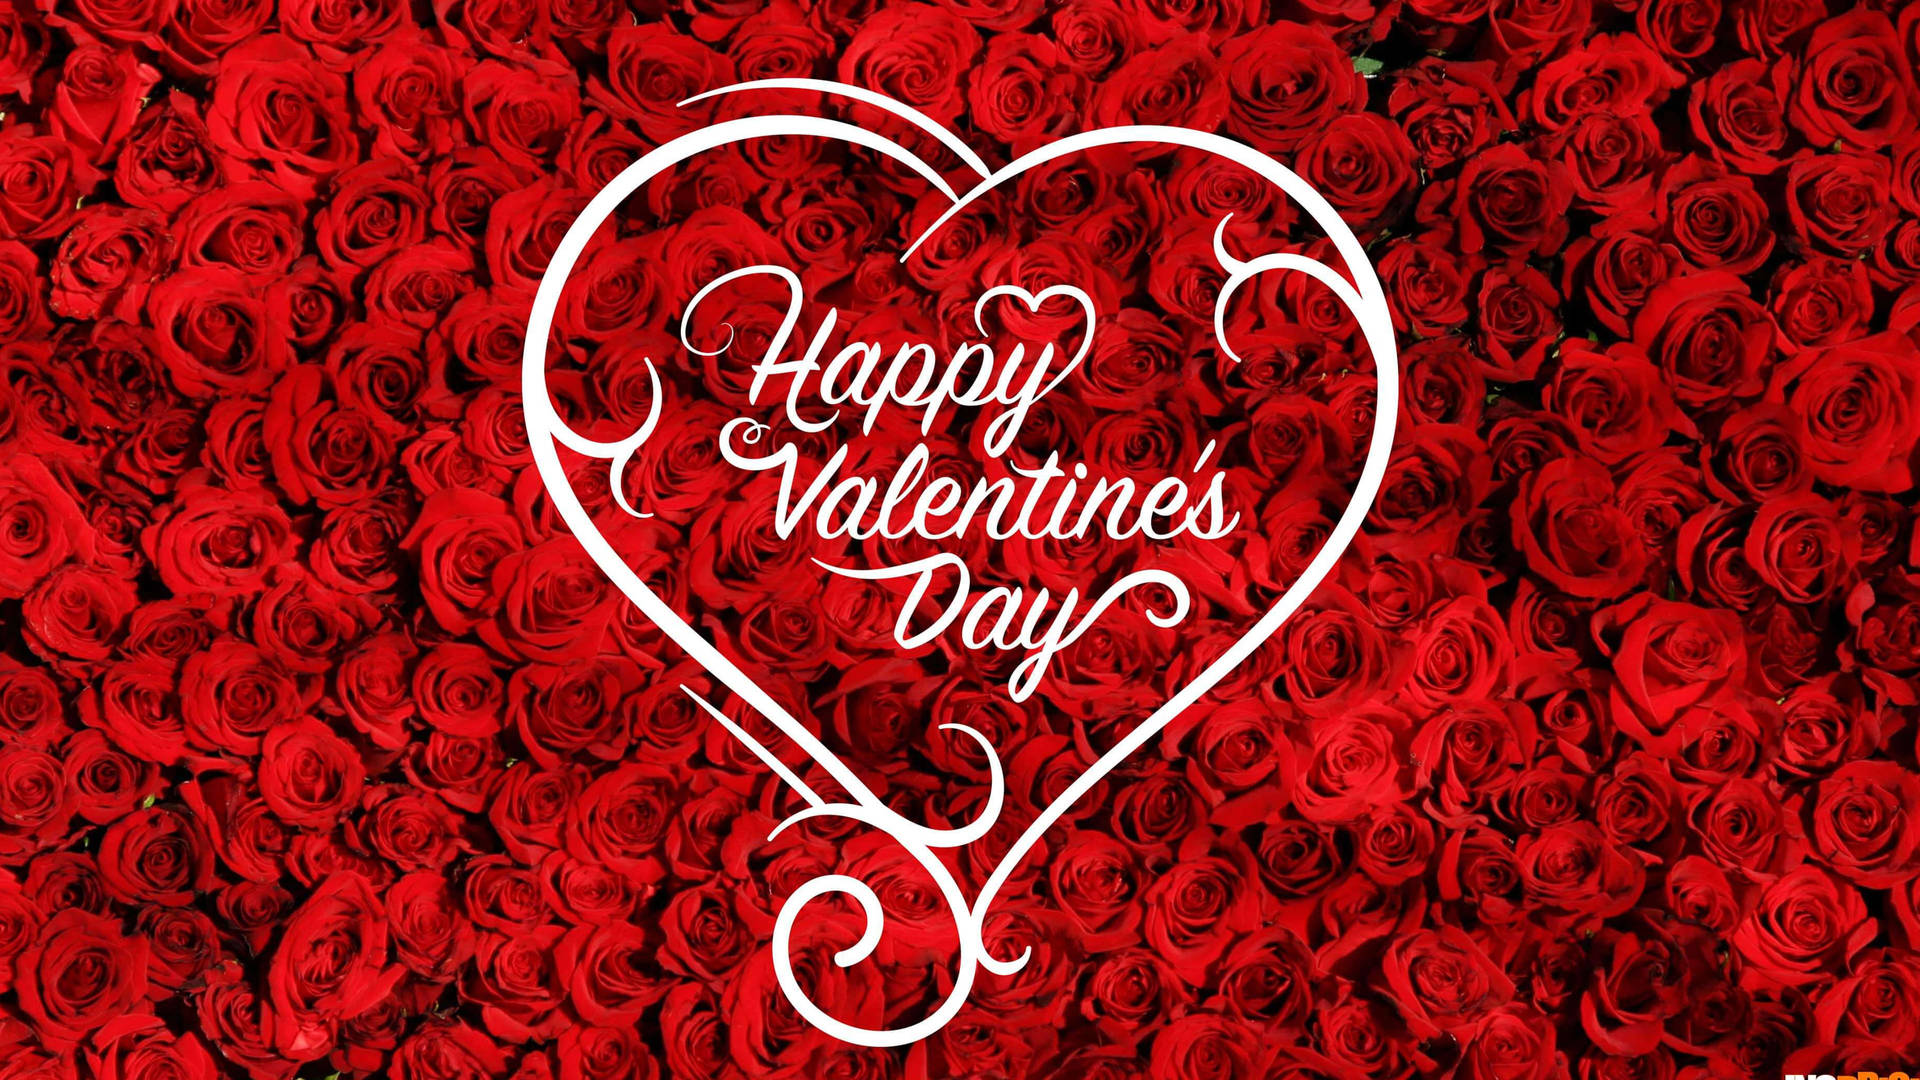 Happy Valentine’s Day Red Roses Desktop Wallpaper